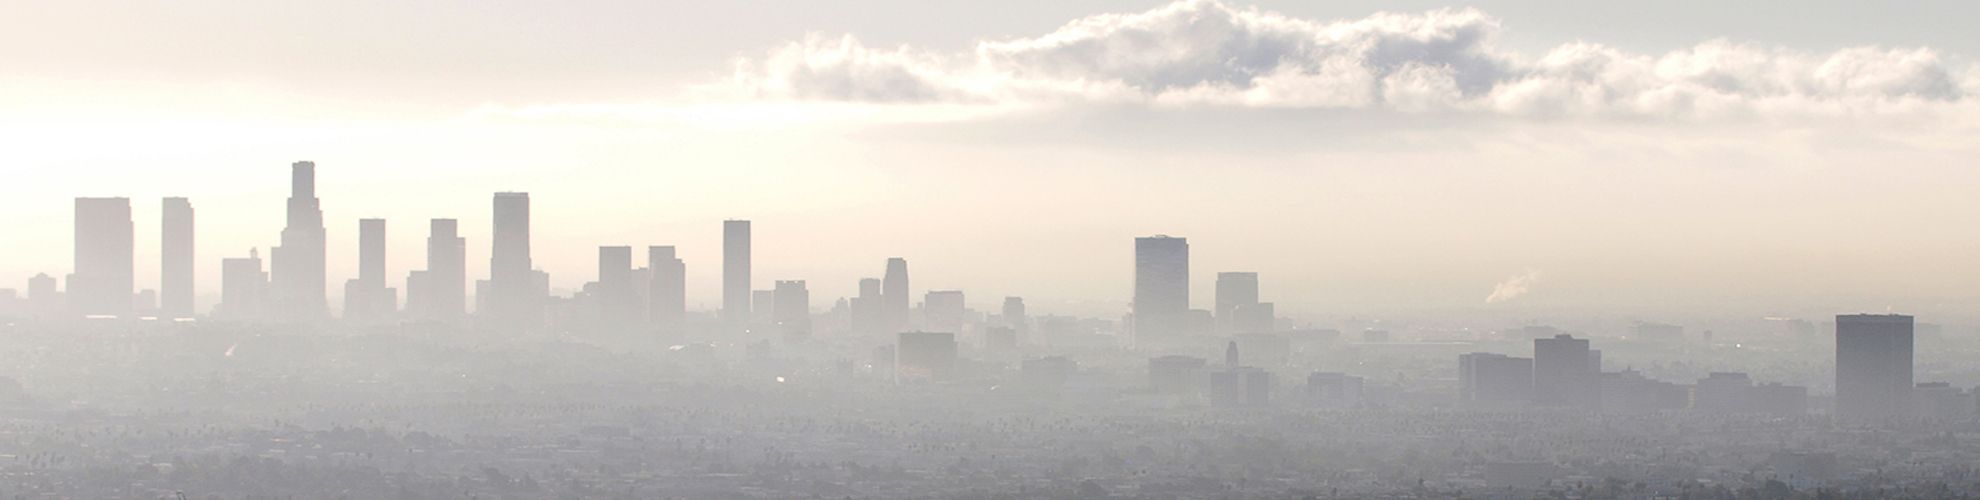 Widok na miasto i smog